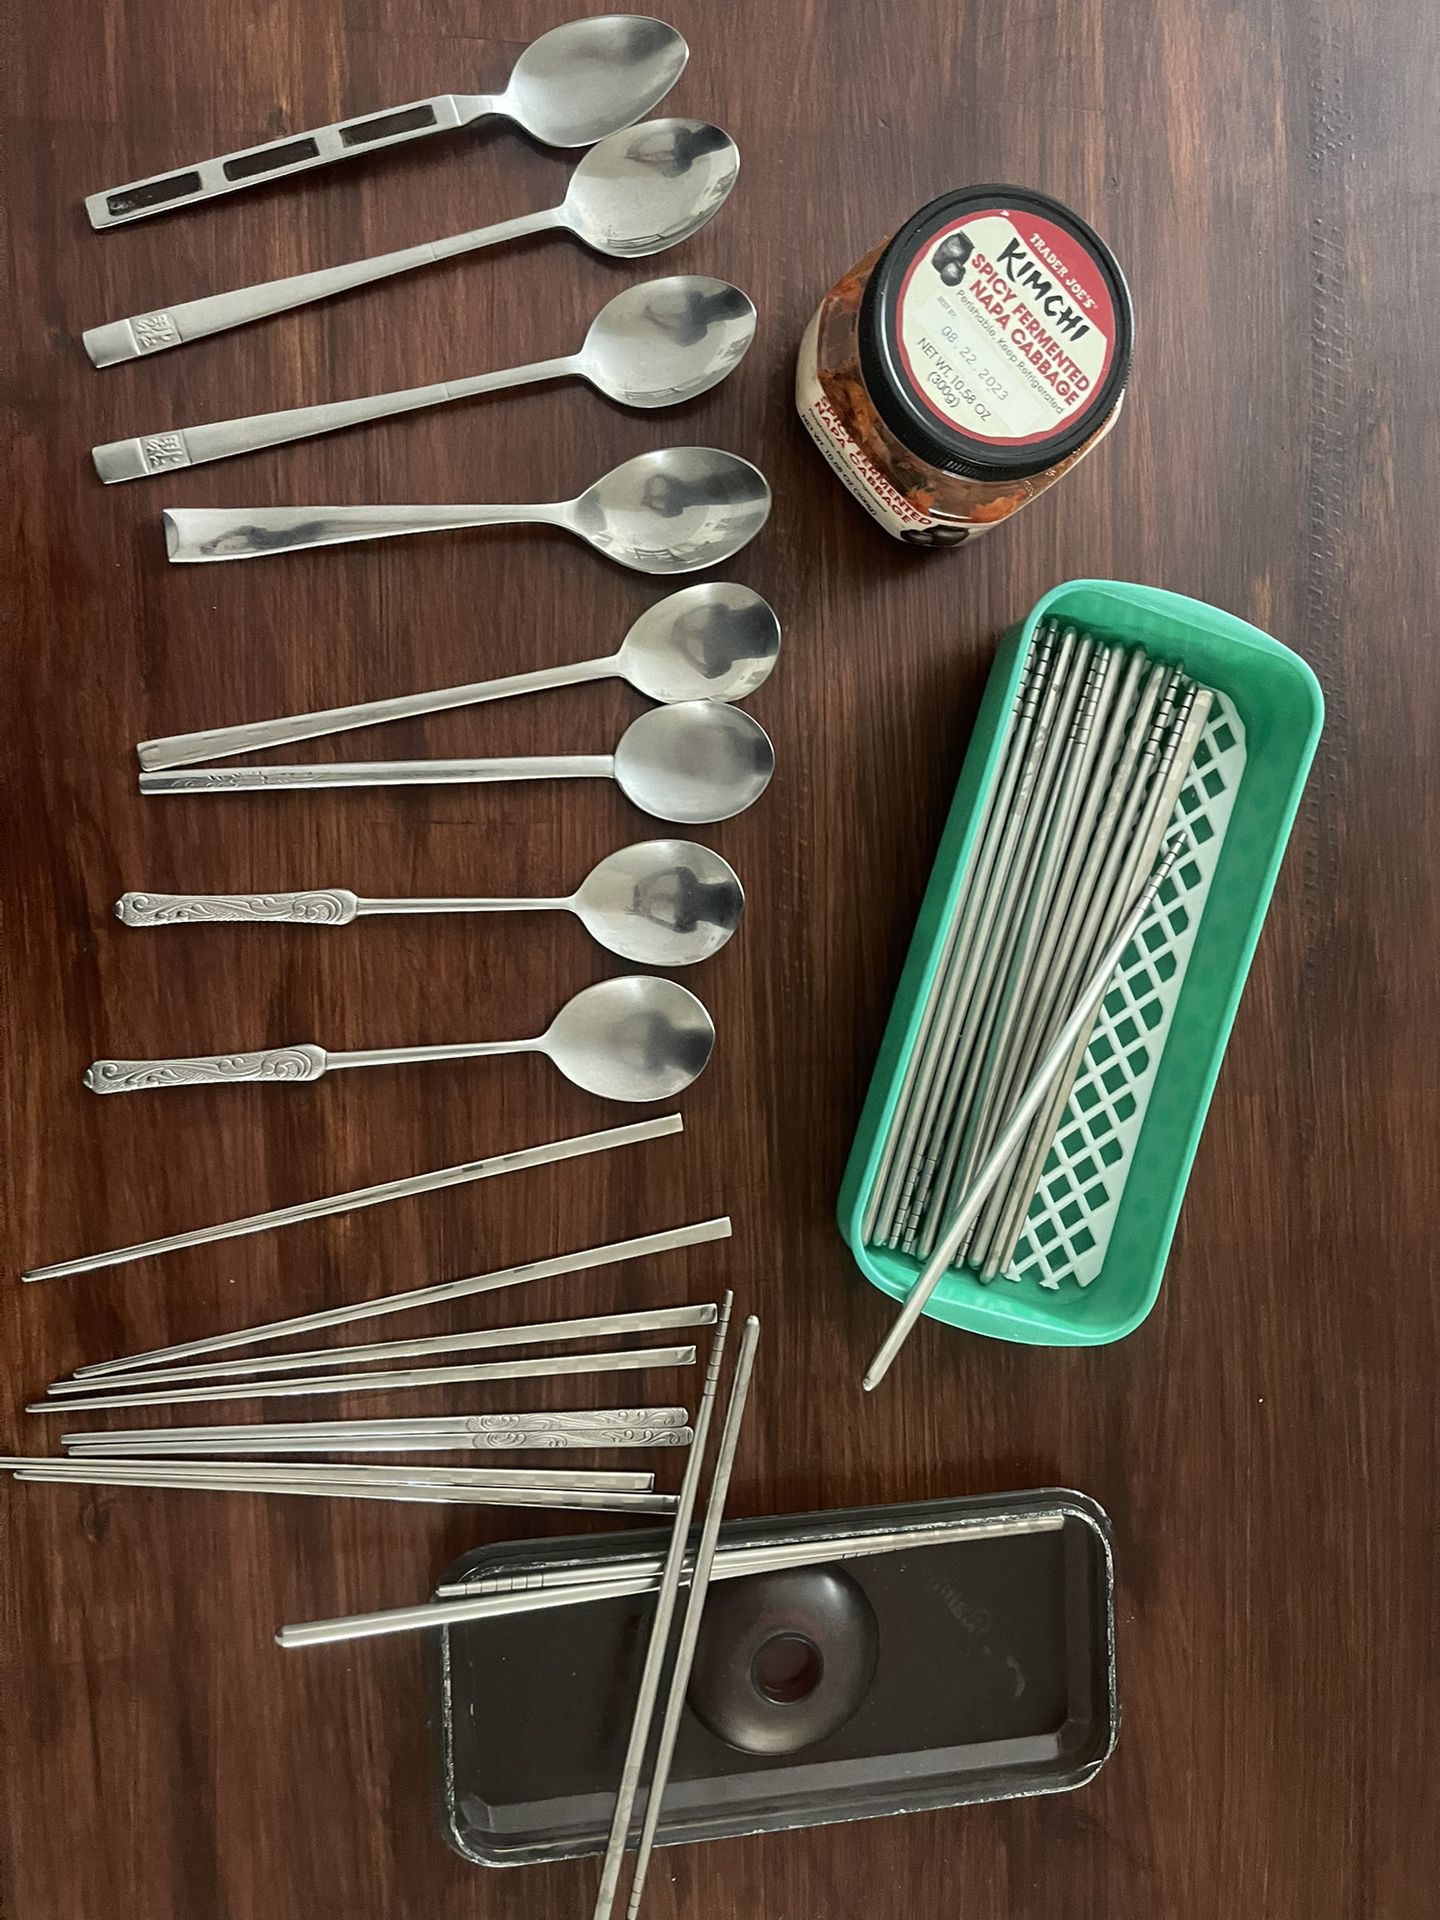 Chopsticks Spoons Stainless Steel Set Made In Korea Vintage 